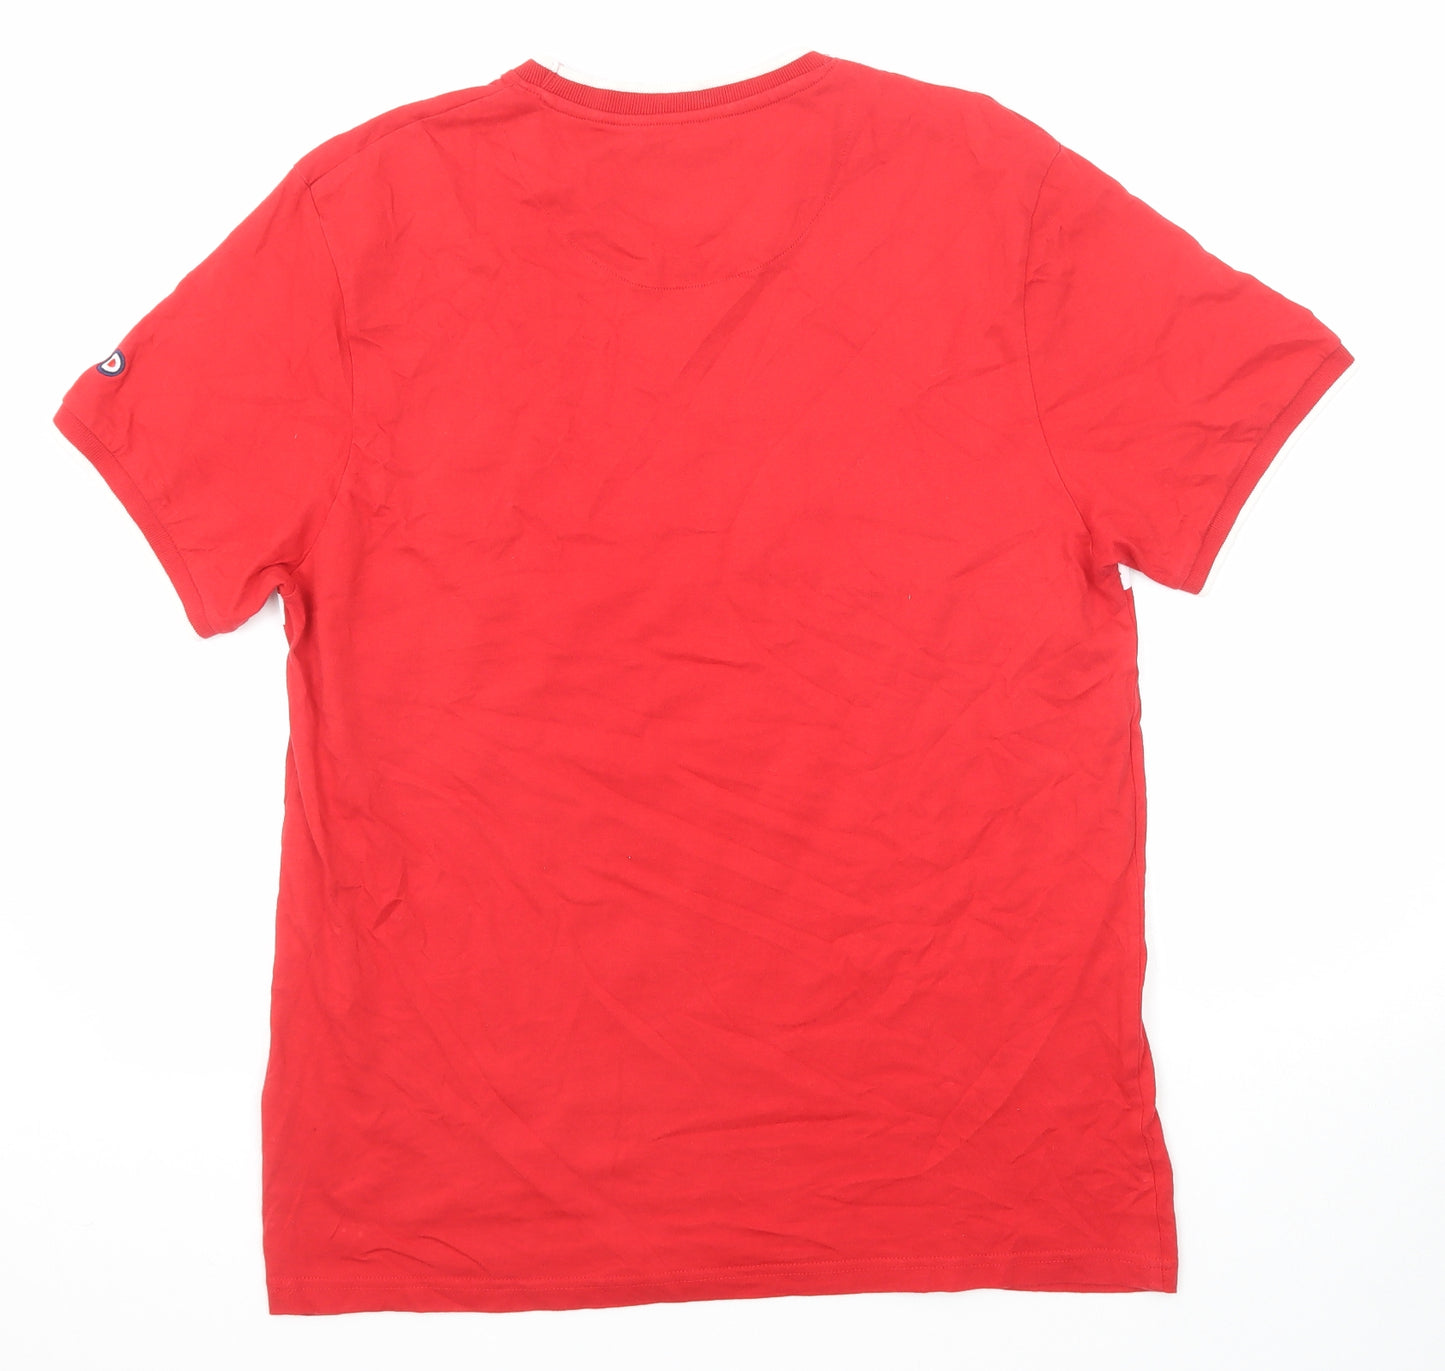 Lambretta Mens Red Colourblock Cotton T-Shirt Size XL Round Neck